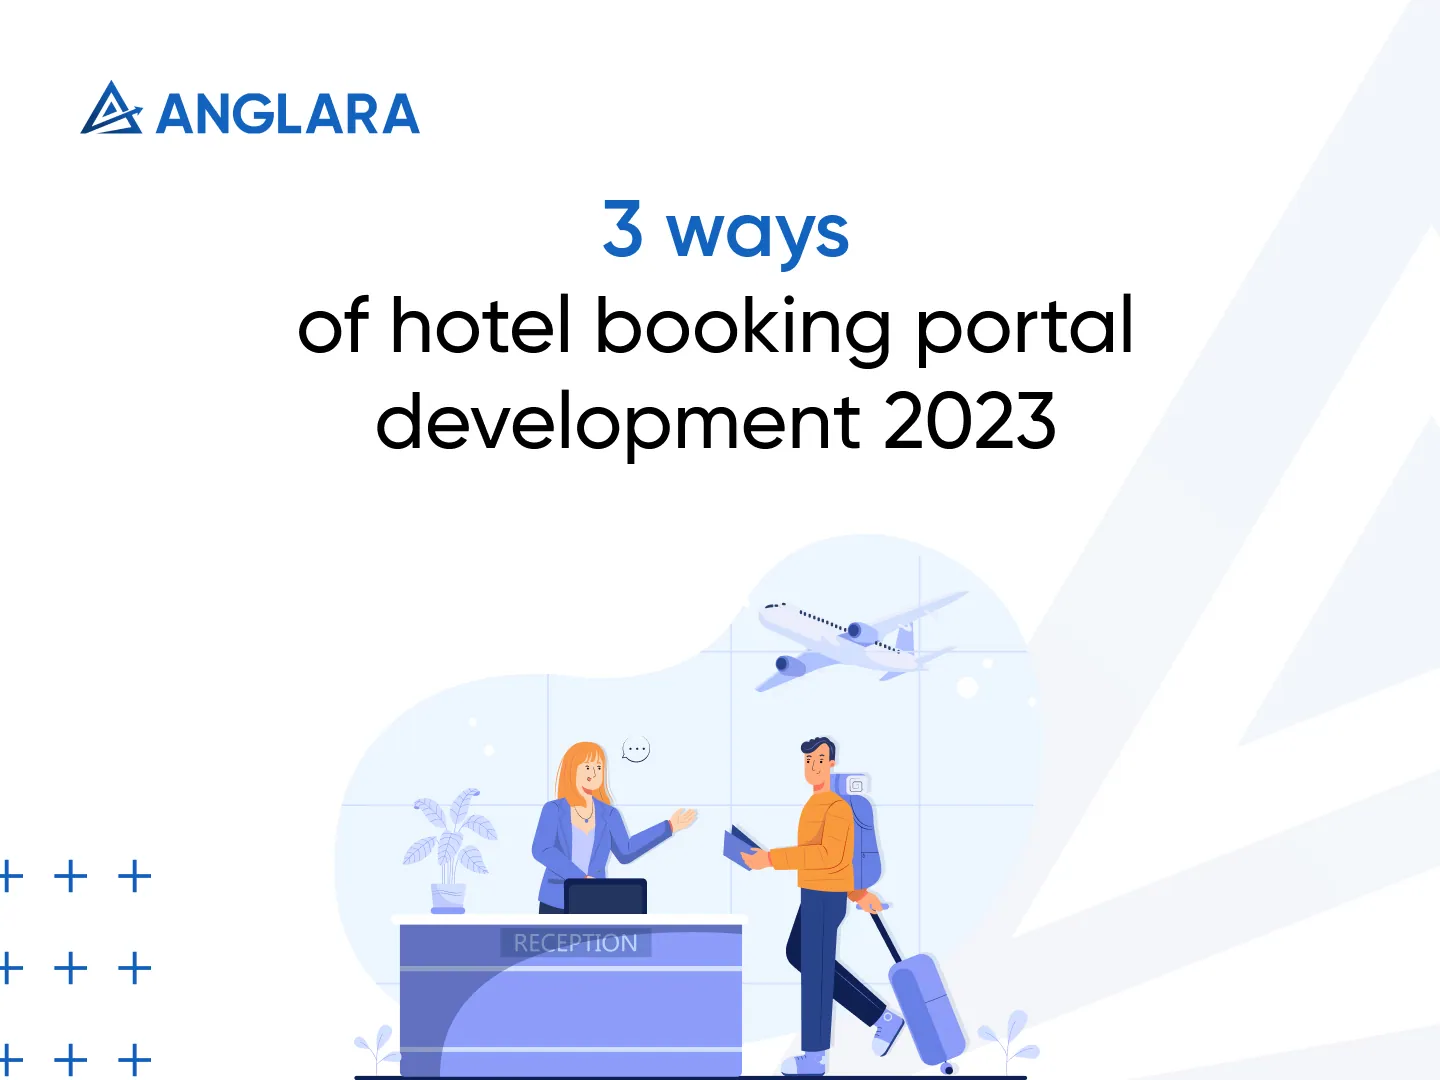 3 ways to build hotel booking portal development 2023